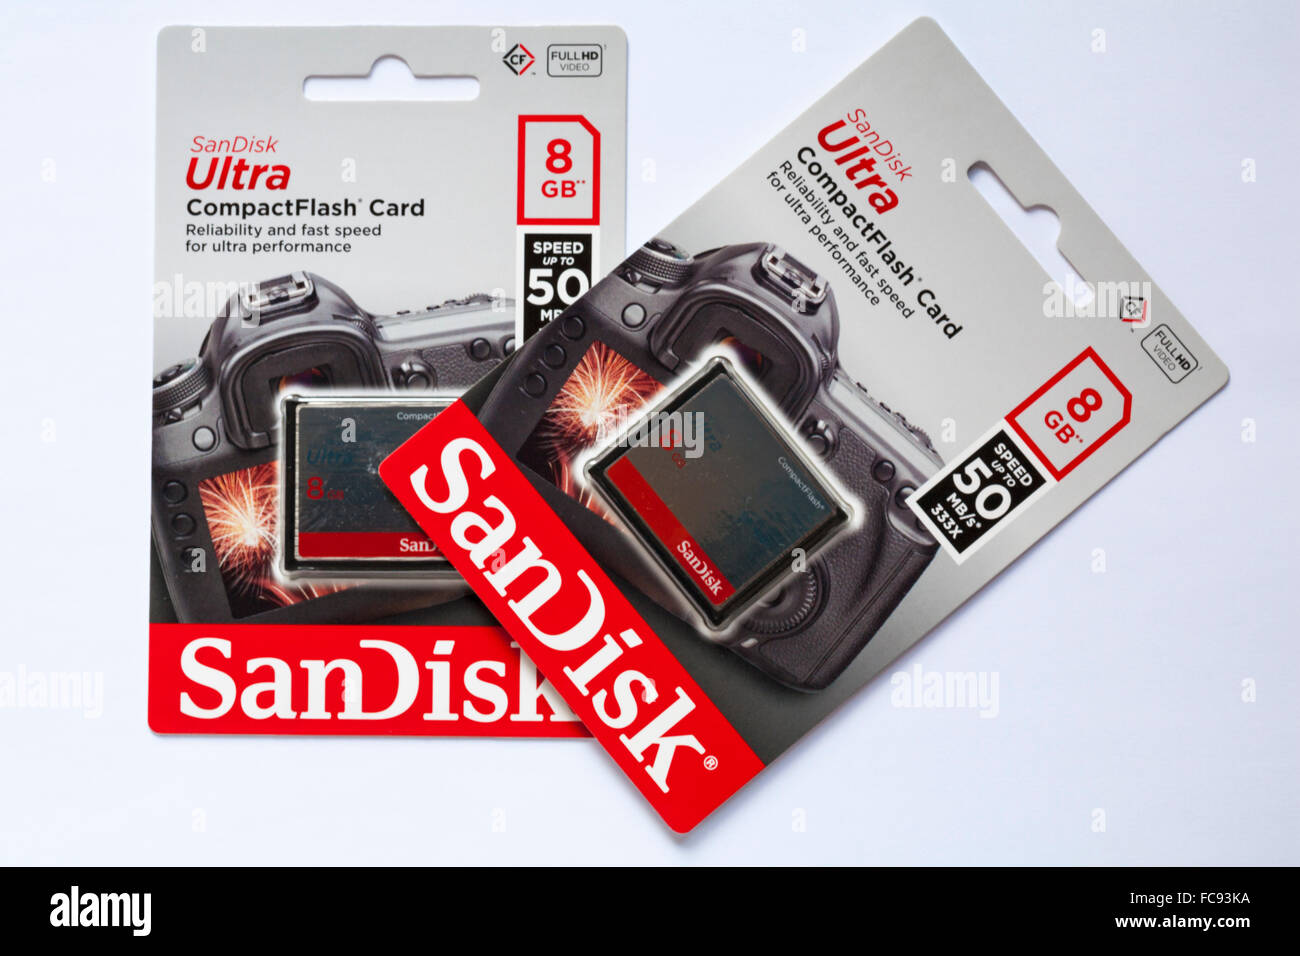 SanDisk Ultra - Flash Memory Card - 8 GB - CompactFlash